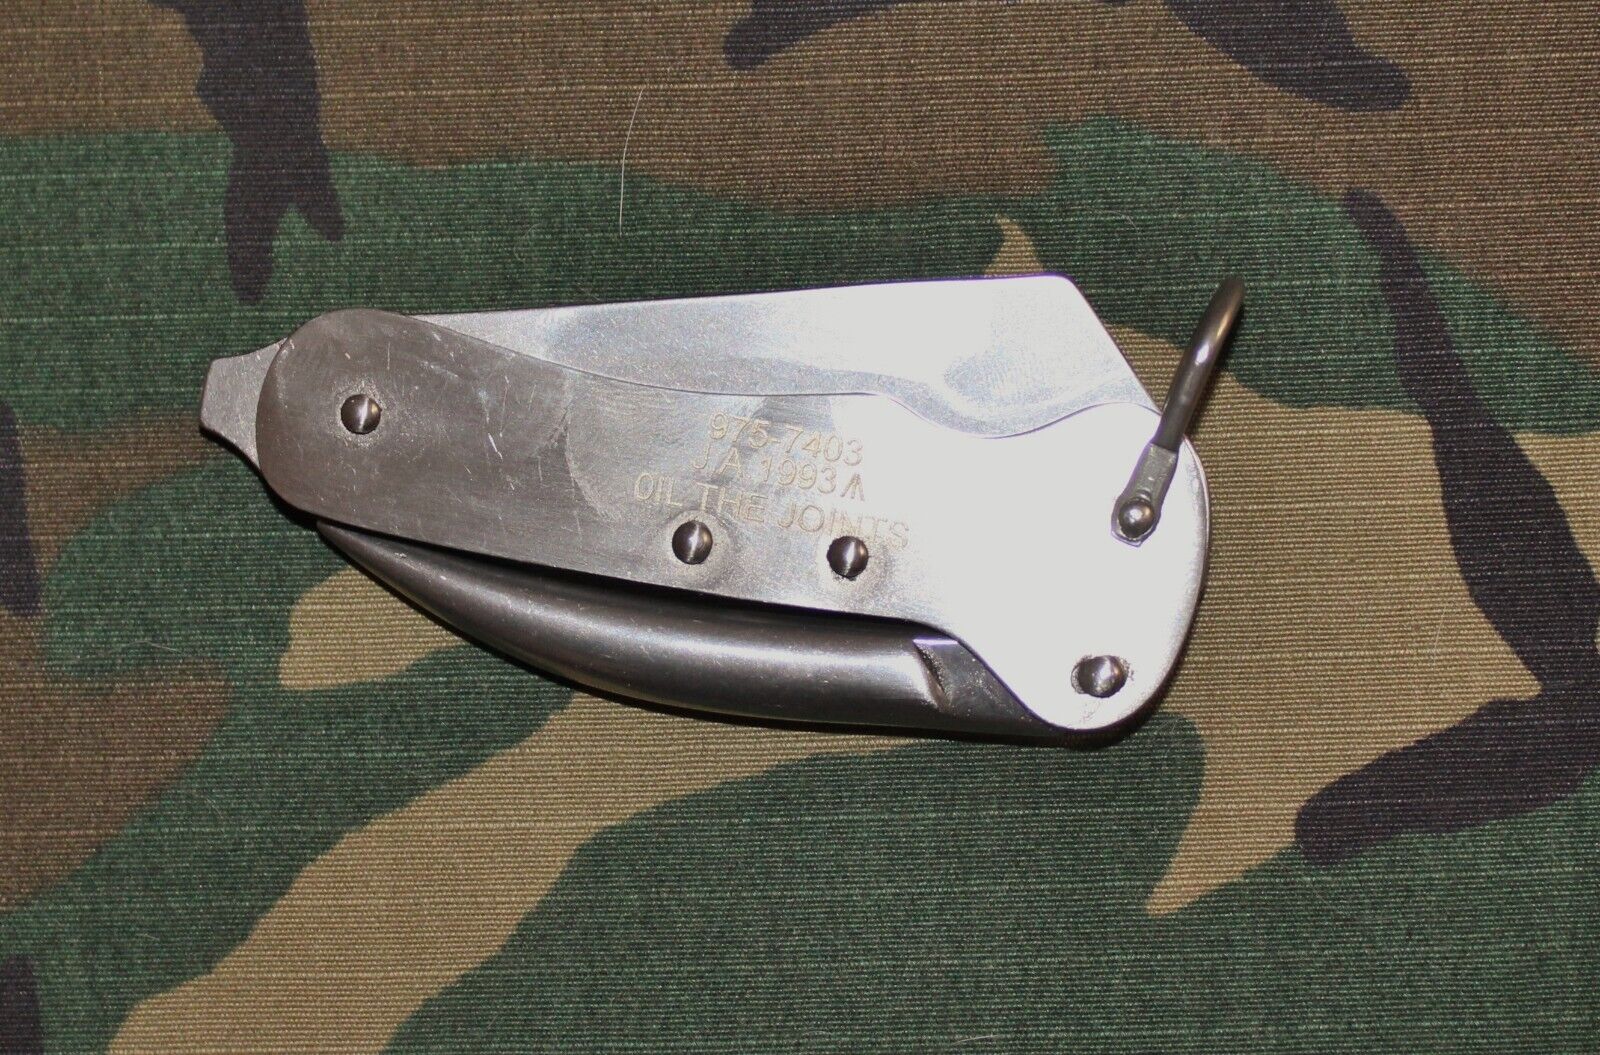 Genuine British Army Pocket knife, Made in Sheffield, England